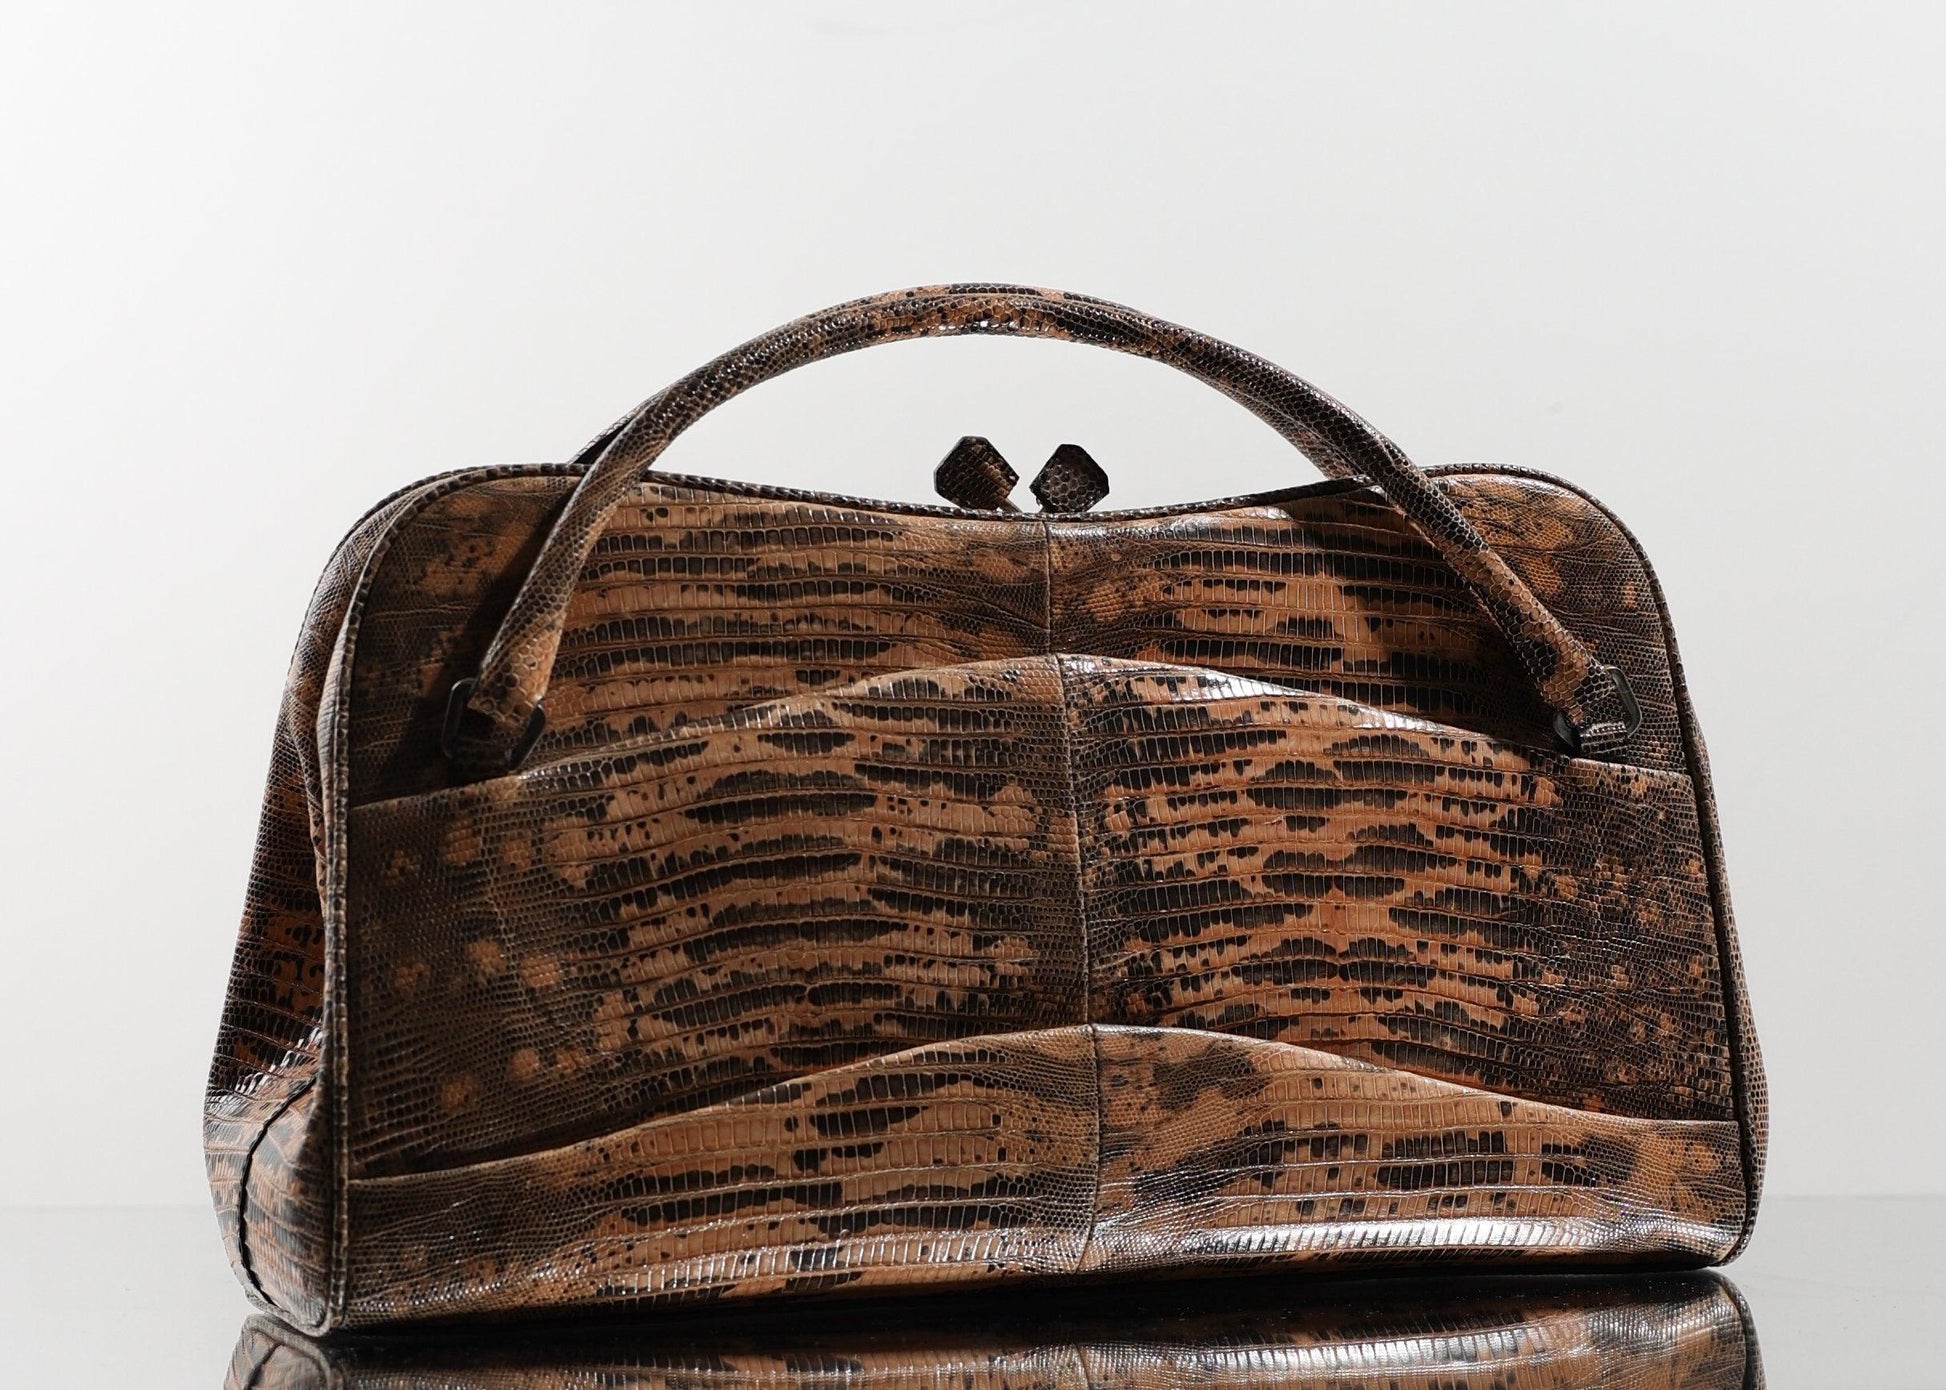 Prada Crocodile leather bag - Known Source